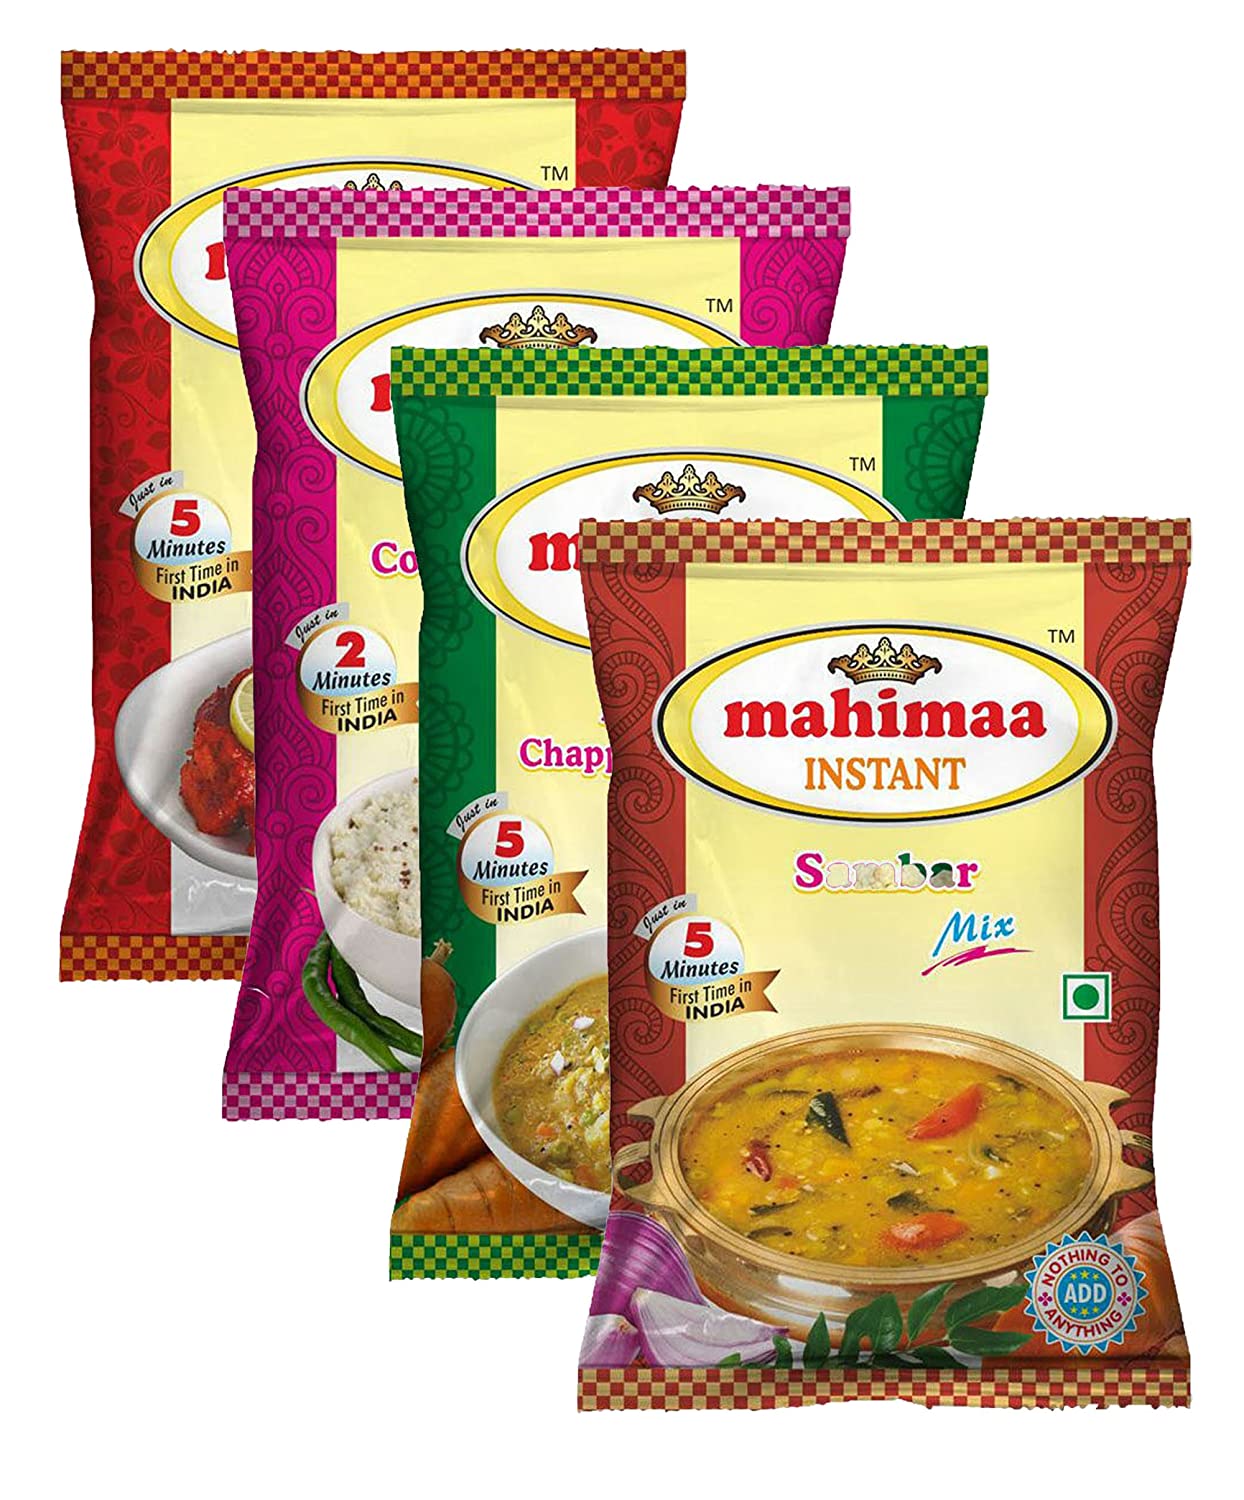 Mahimaa Instant Chilli 65 Mix, Coconut Chutney Mix,Idly, Dosa, Chappathi and Parotta Kuruma Mix and Sambar Mix, Size- 50g, Pack of 4